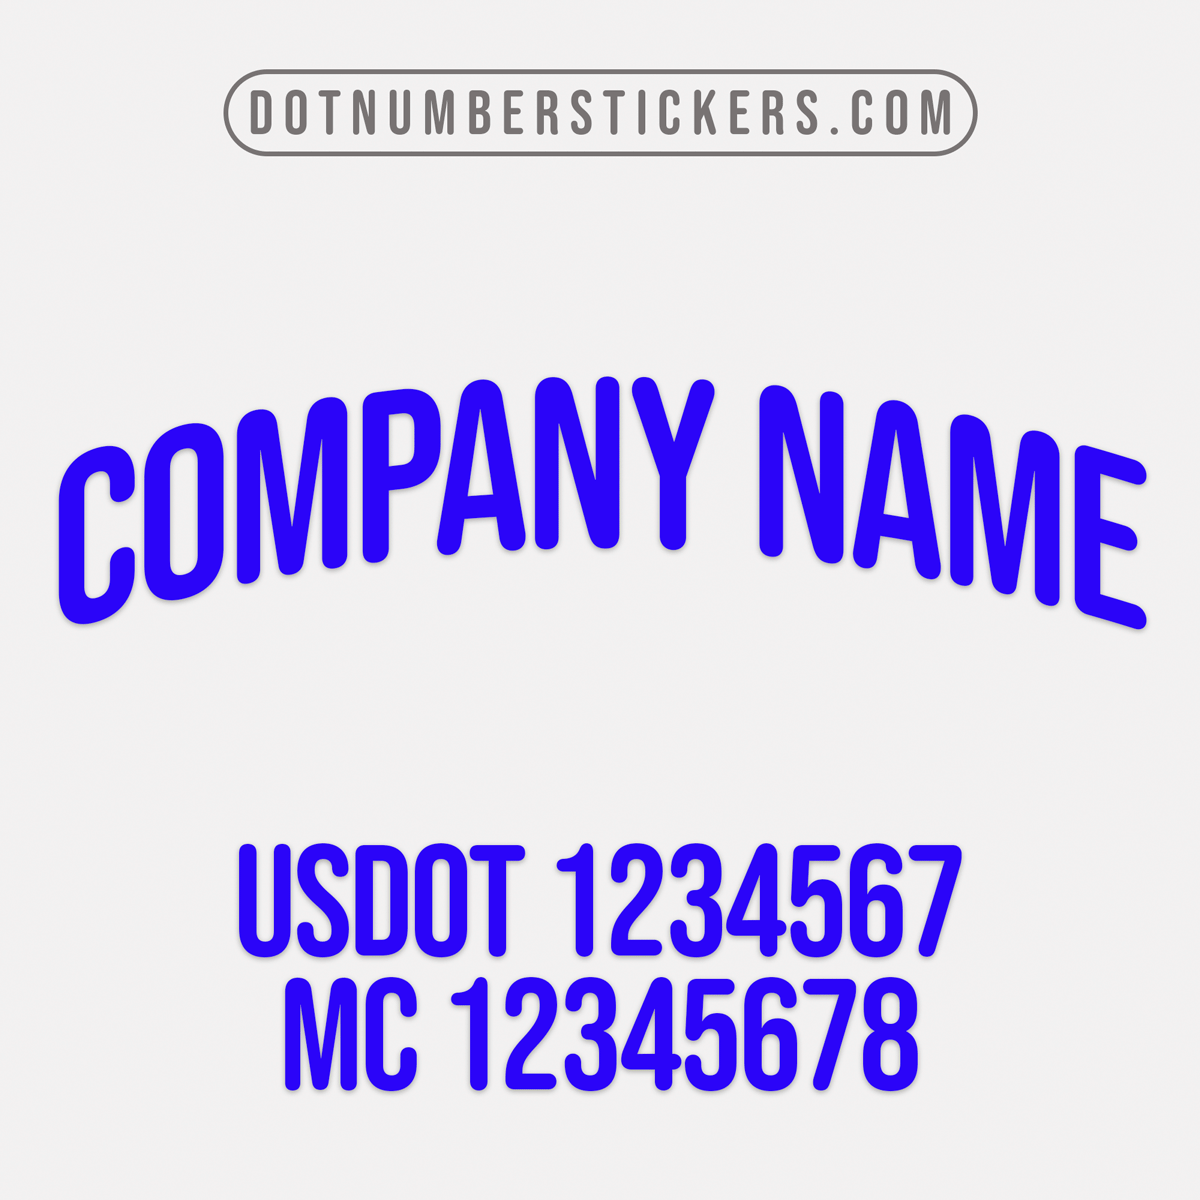 company name decal with usdot & mc